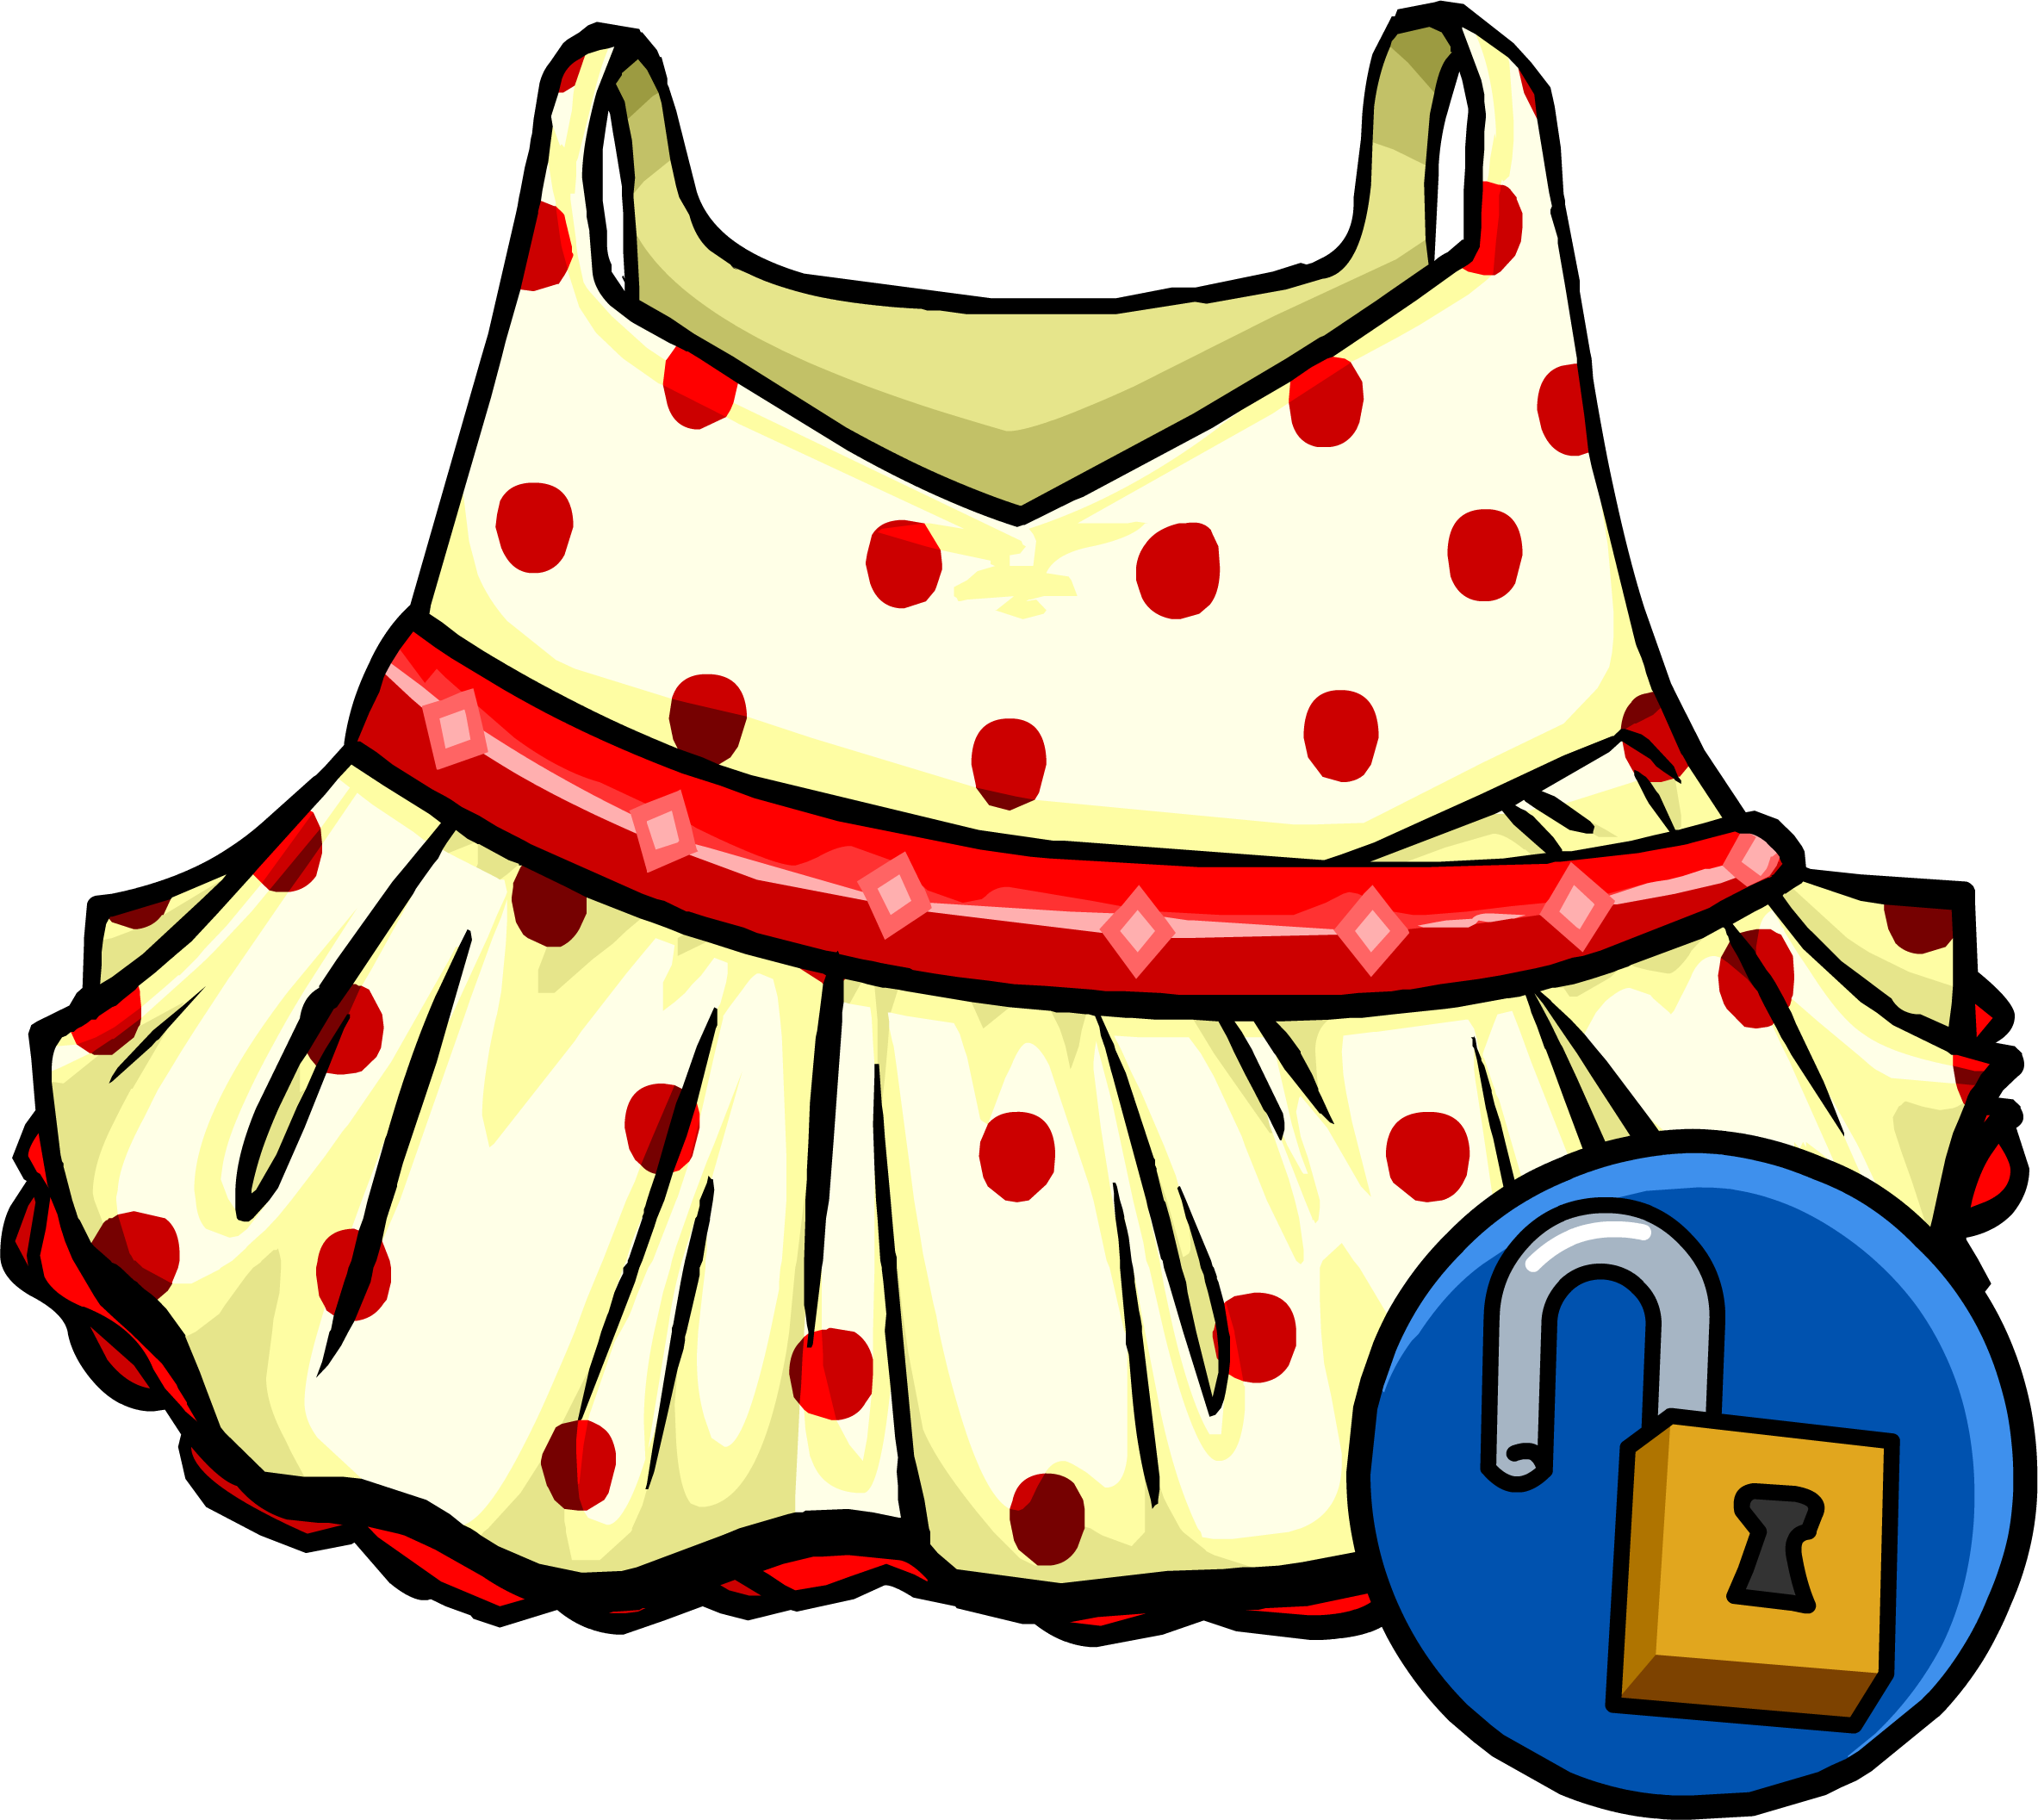 Red Polka Dot Dress - Club Penguin Wiki - The free, editable ...